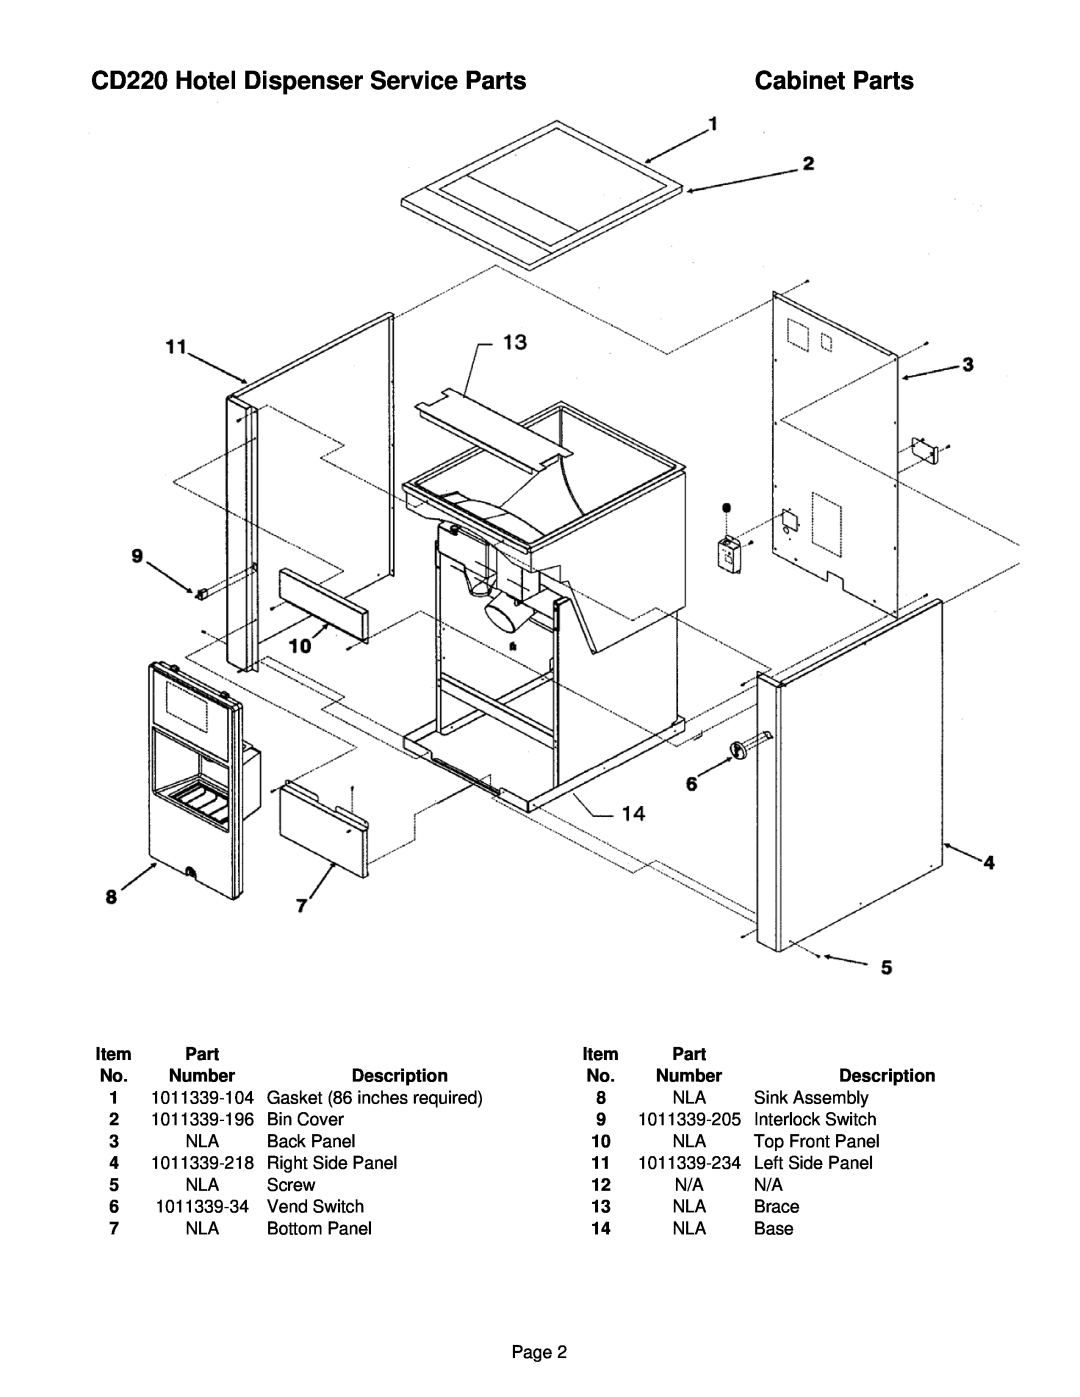 Ice-O-Matic manual CD220 Hotel Dispenser Service Parts, Cabinet Parts, Number, Description 